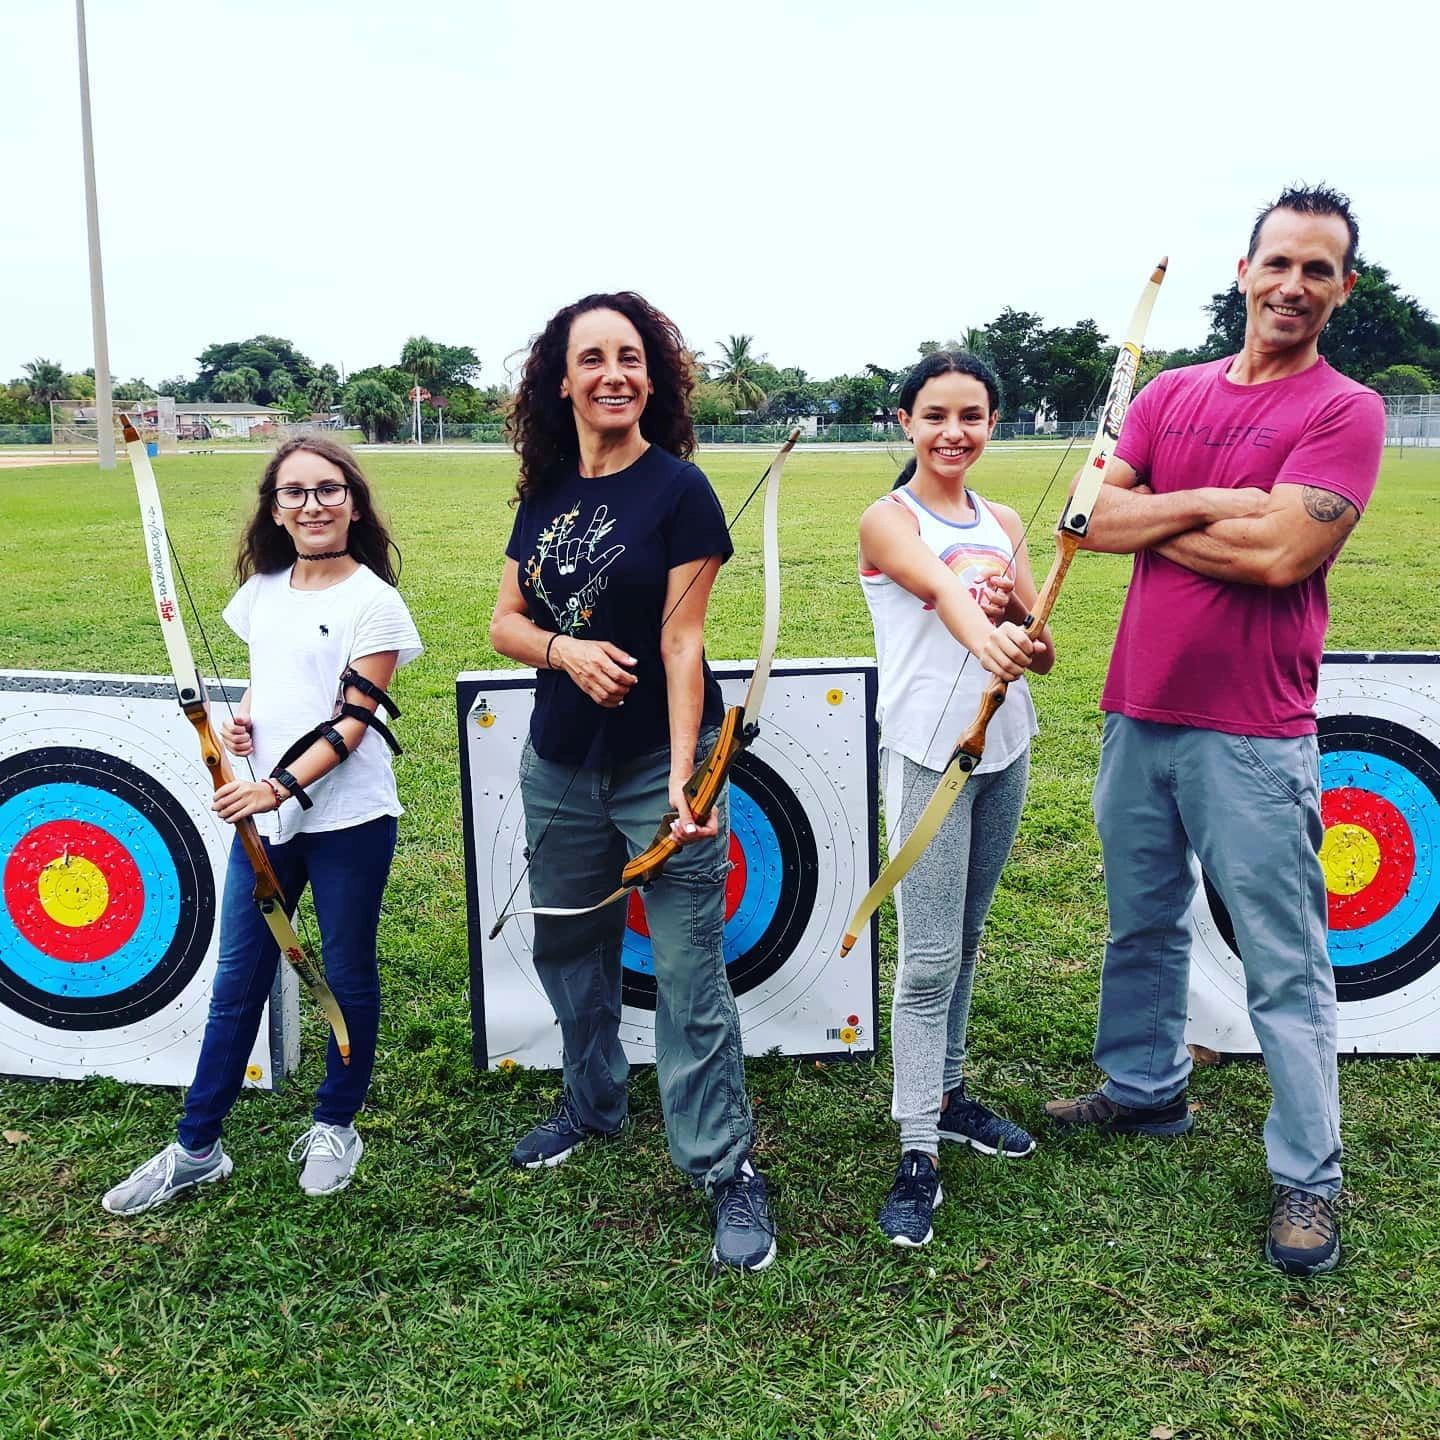 Family archery, archery, target shooting, learning archery as a family, archery range